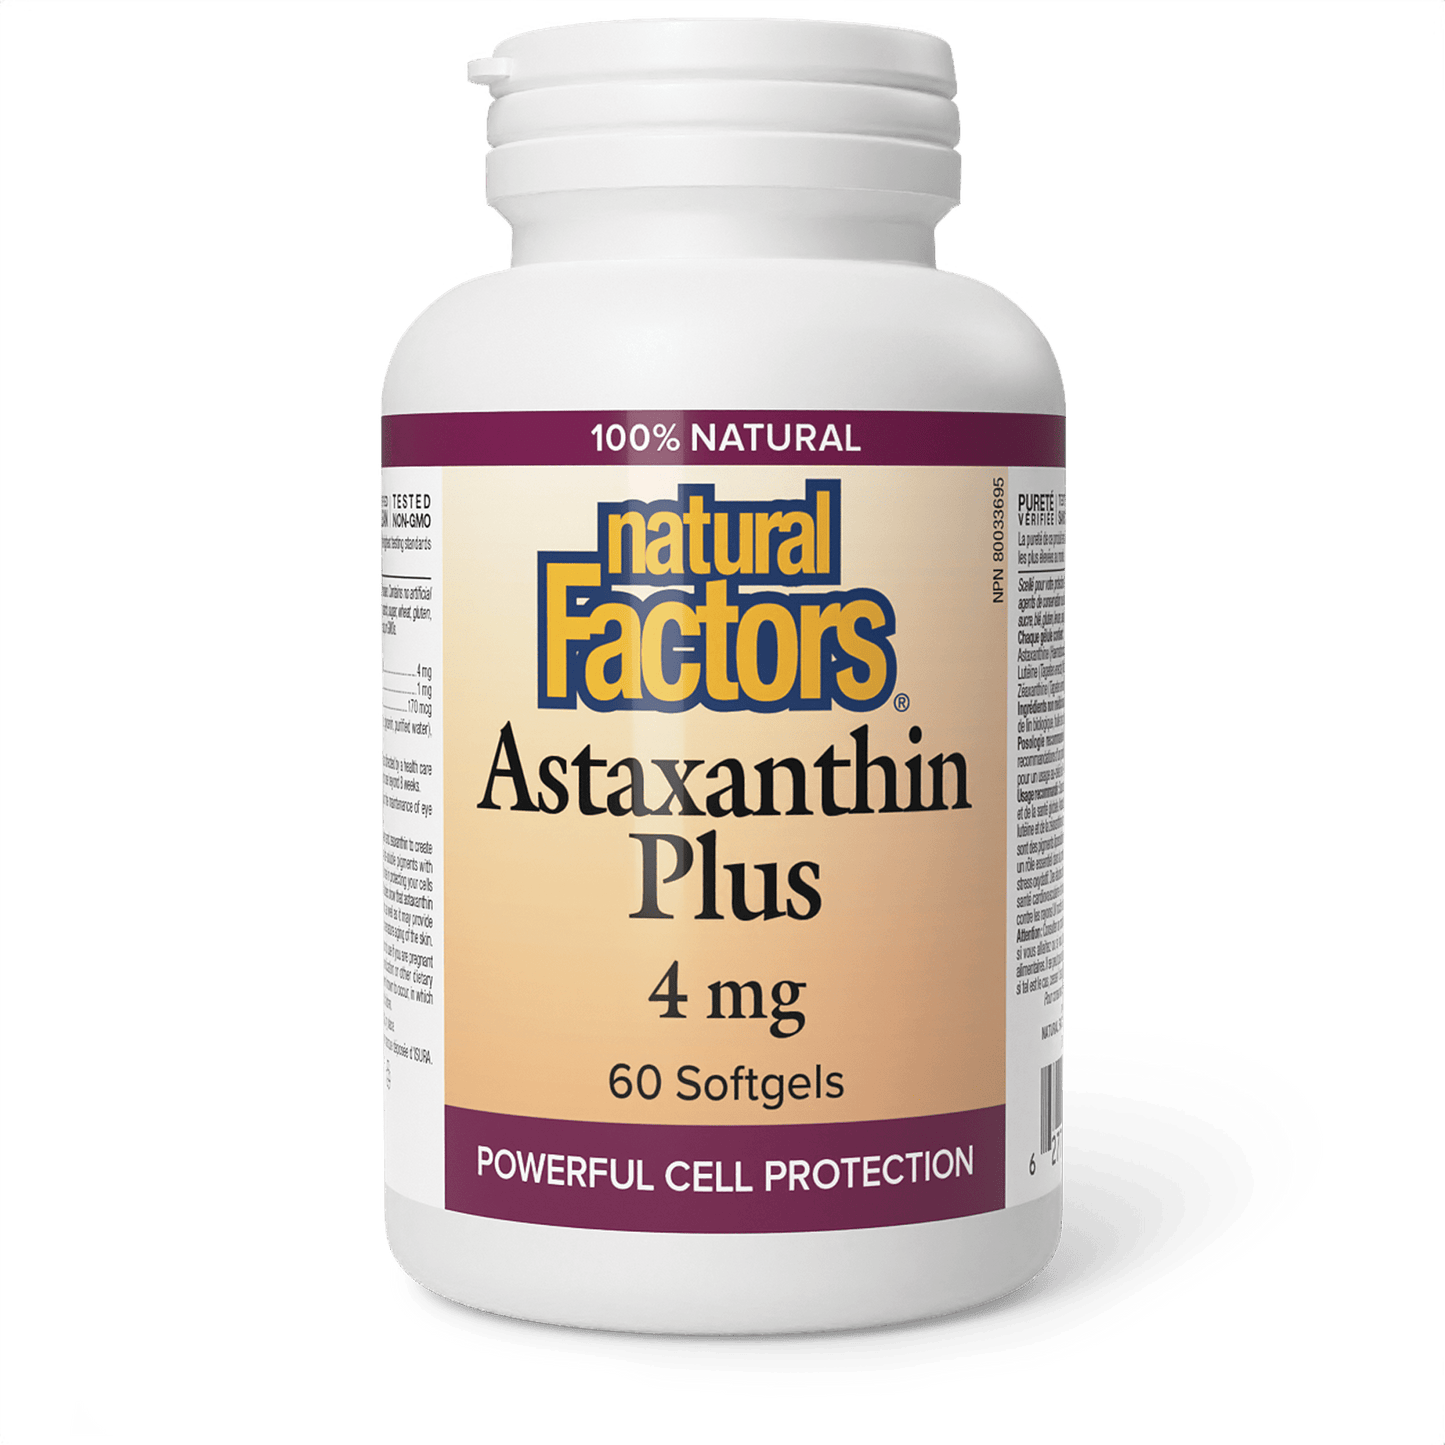 Astaxanthin Plus 4 mg, Natural Factors|v|image|1013